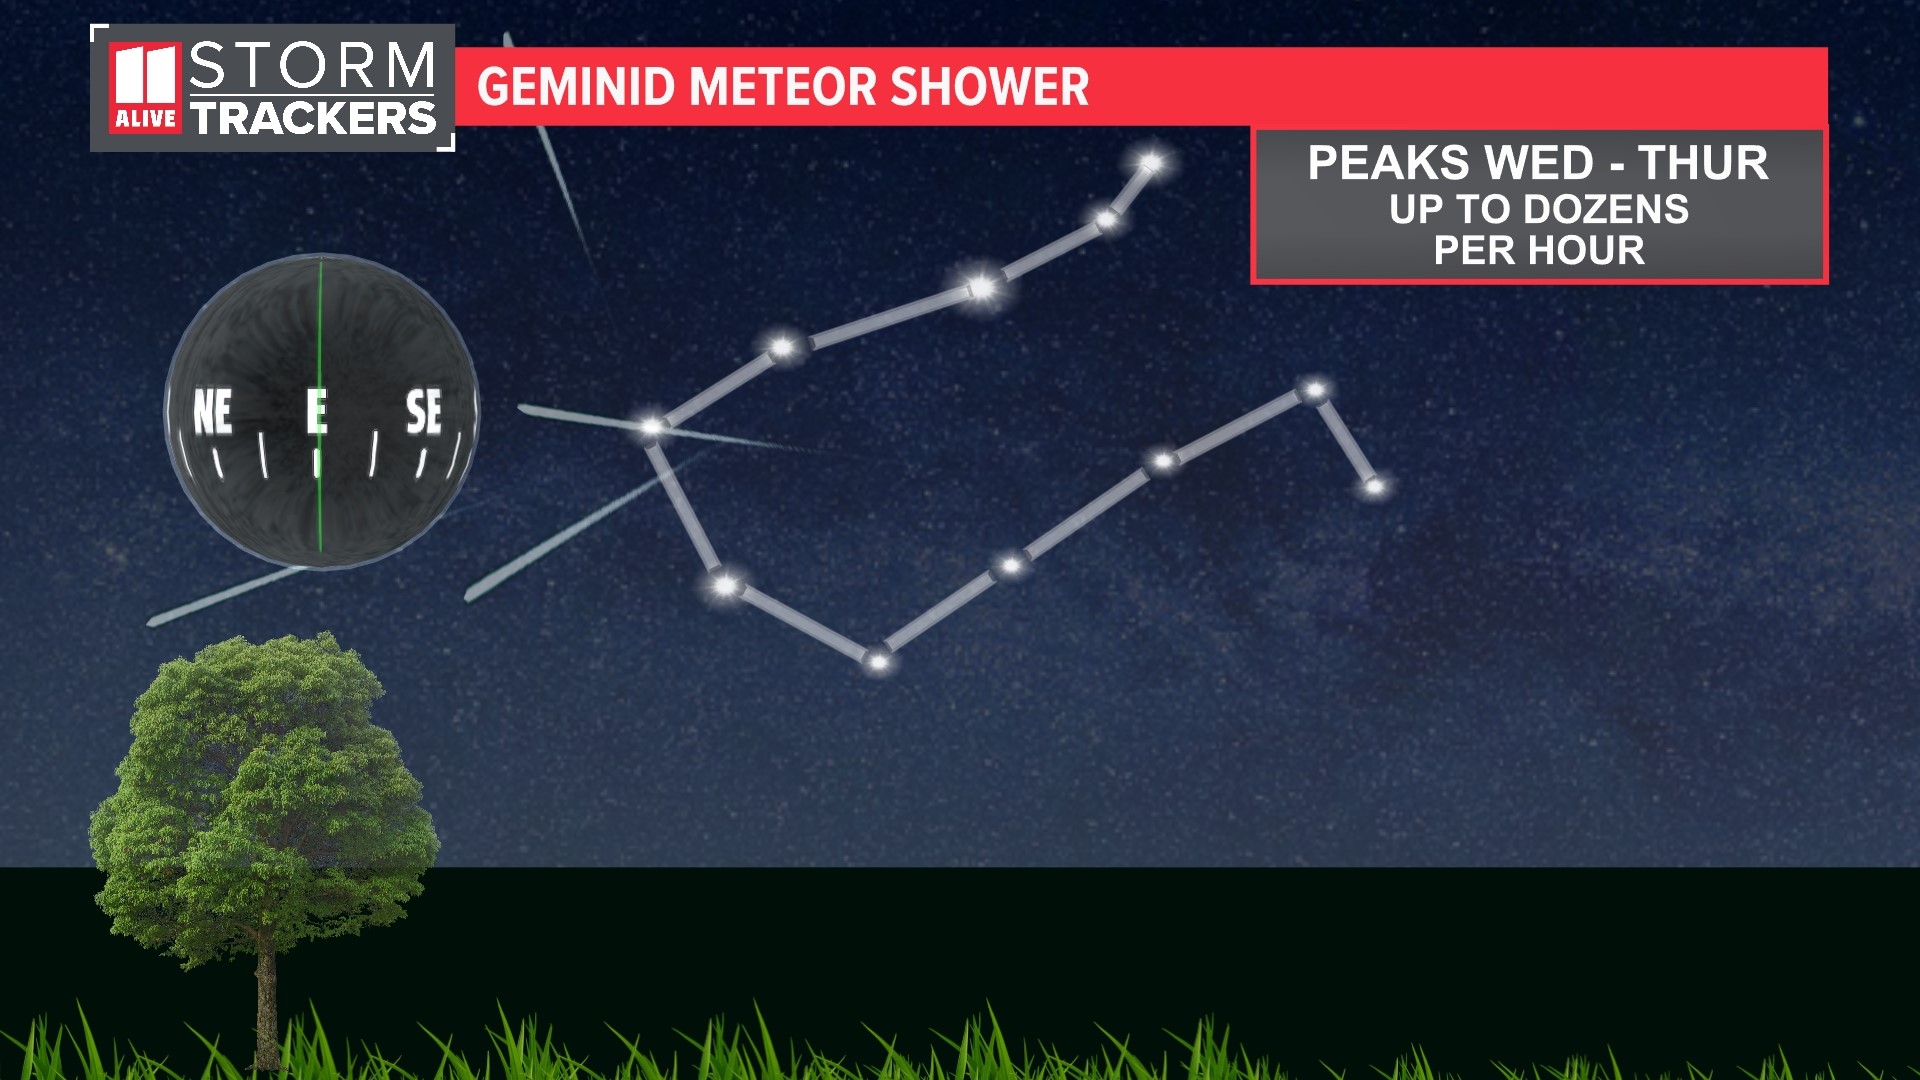 How to watch Geminid Meteor Shower in Atlanta, north Georgia